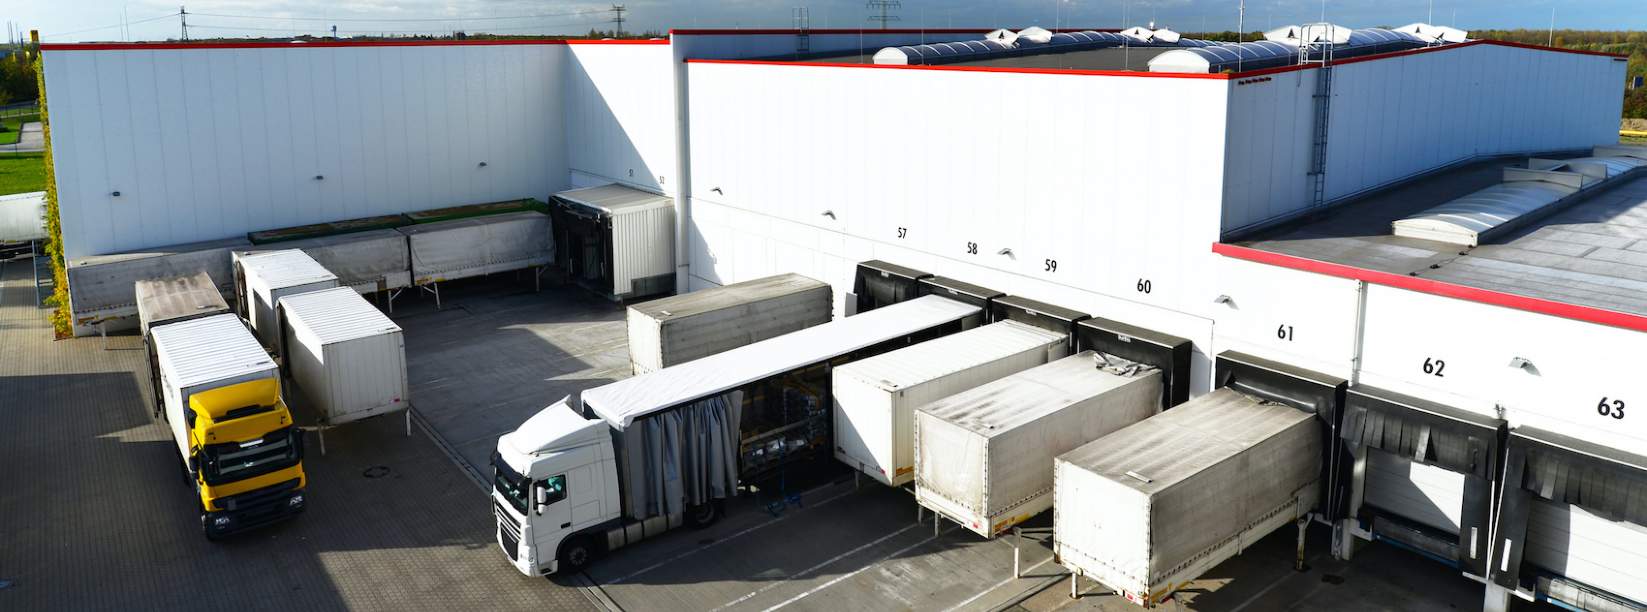 Logistics and goods storage